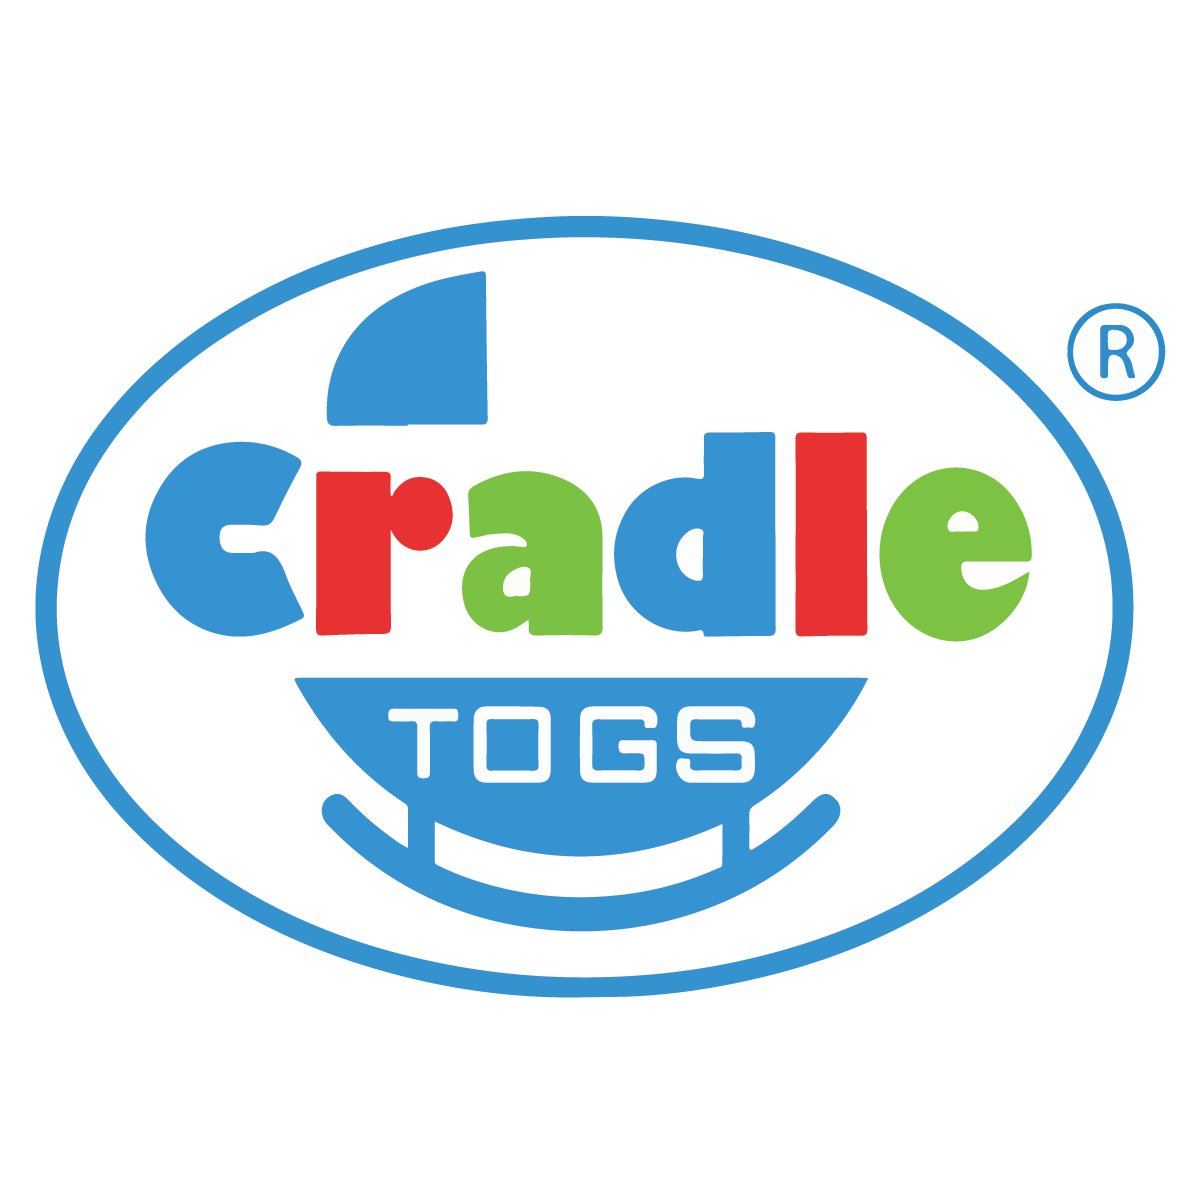 Cradle Togs